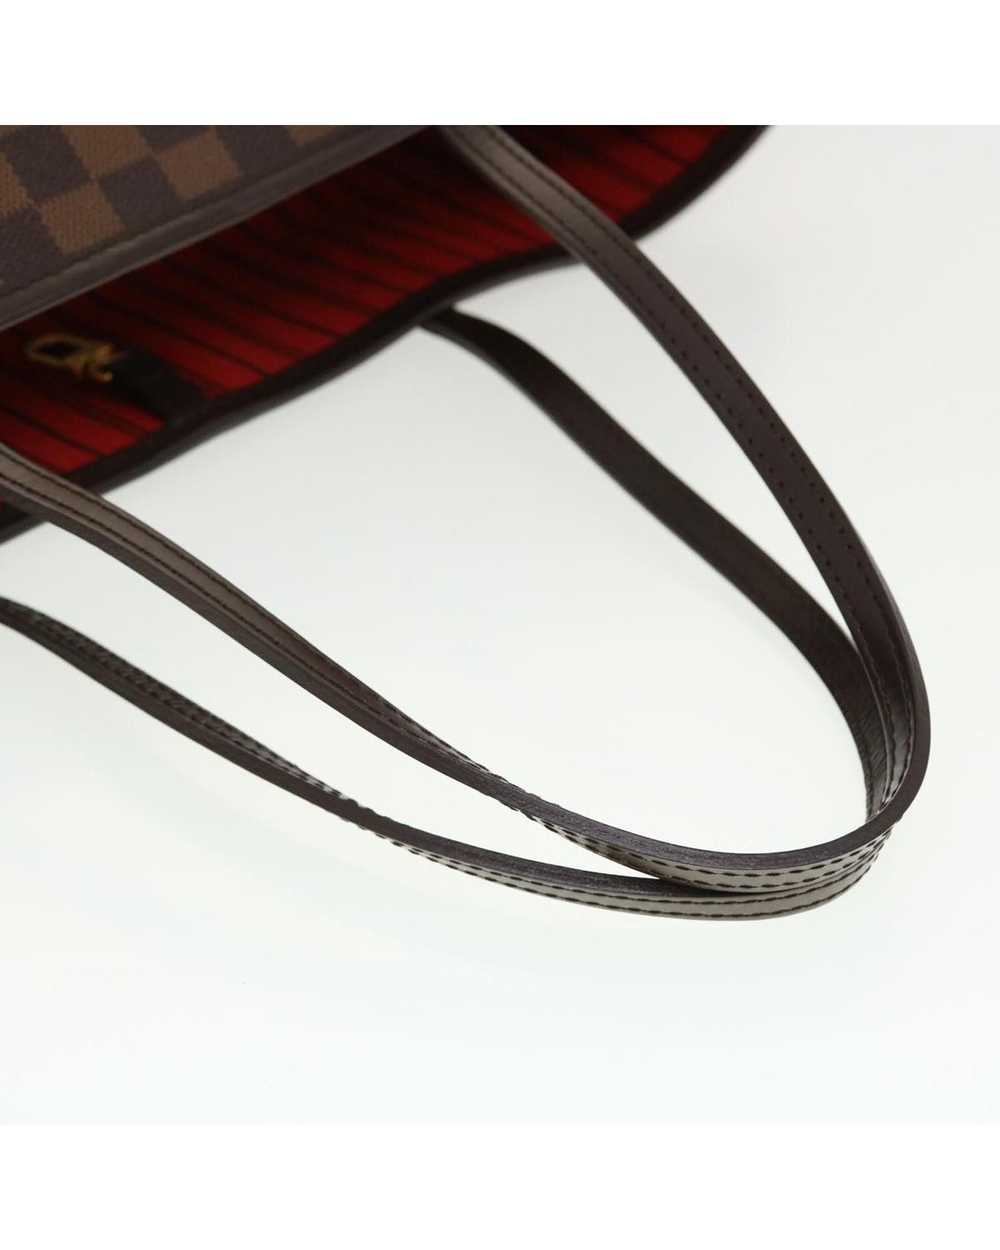 Louis Vuitton Classic Damier Ebene Tote Bag - image 7